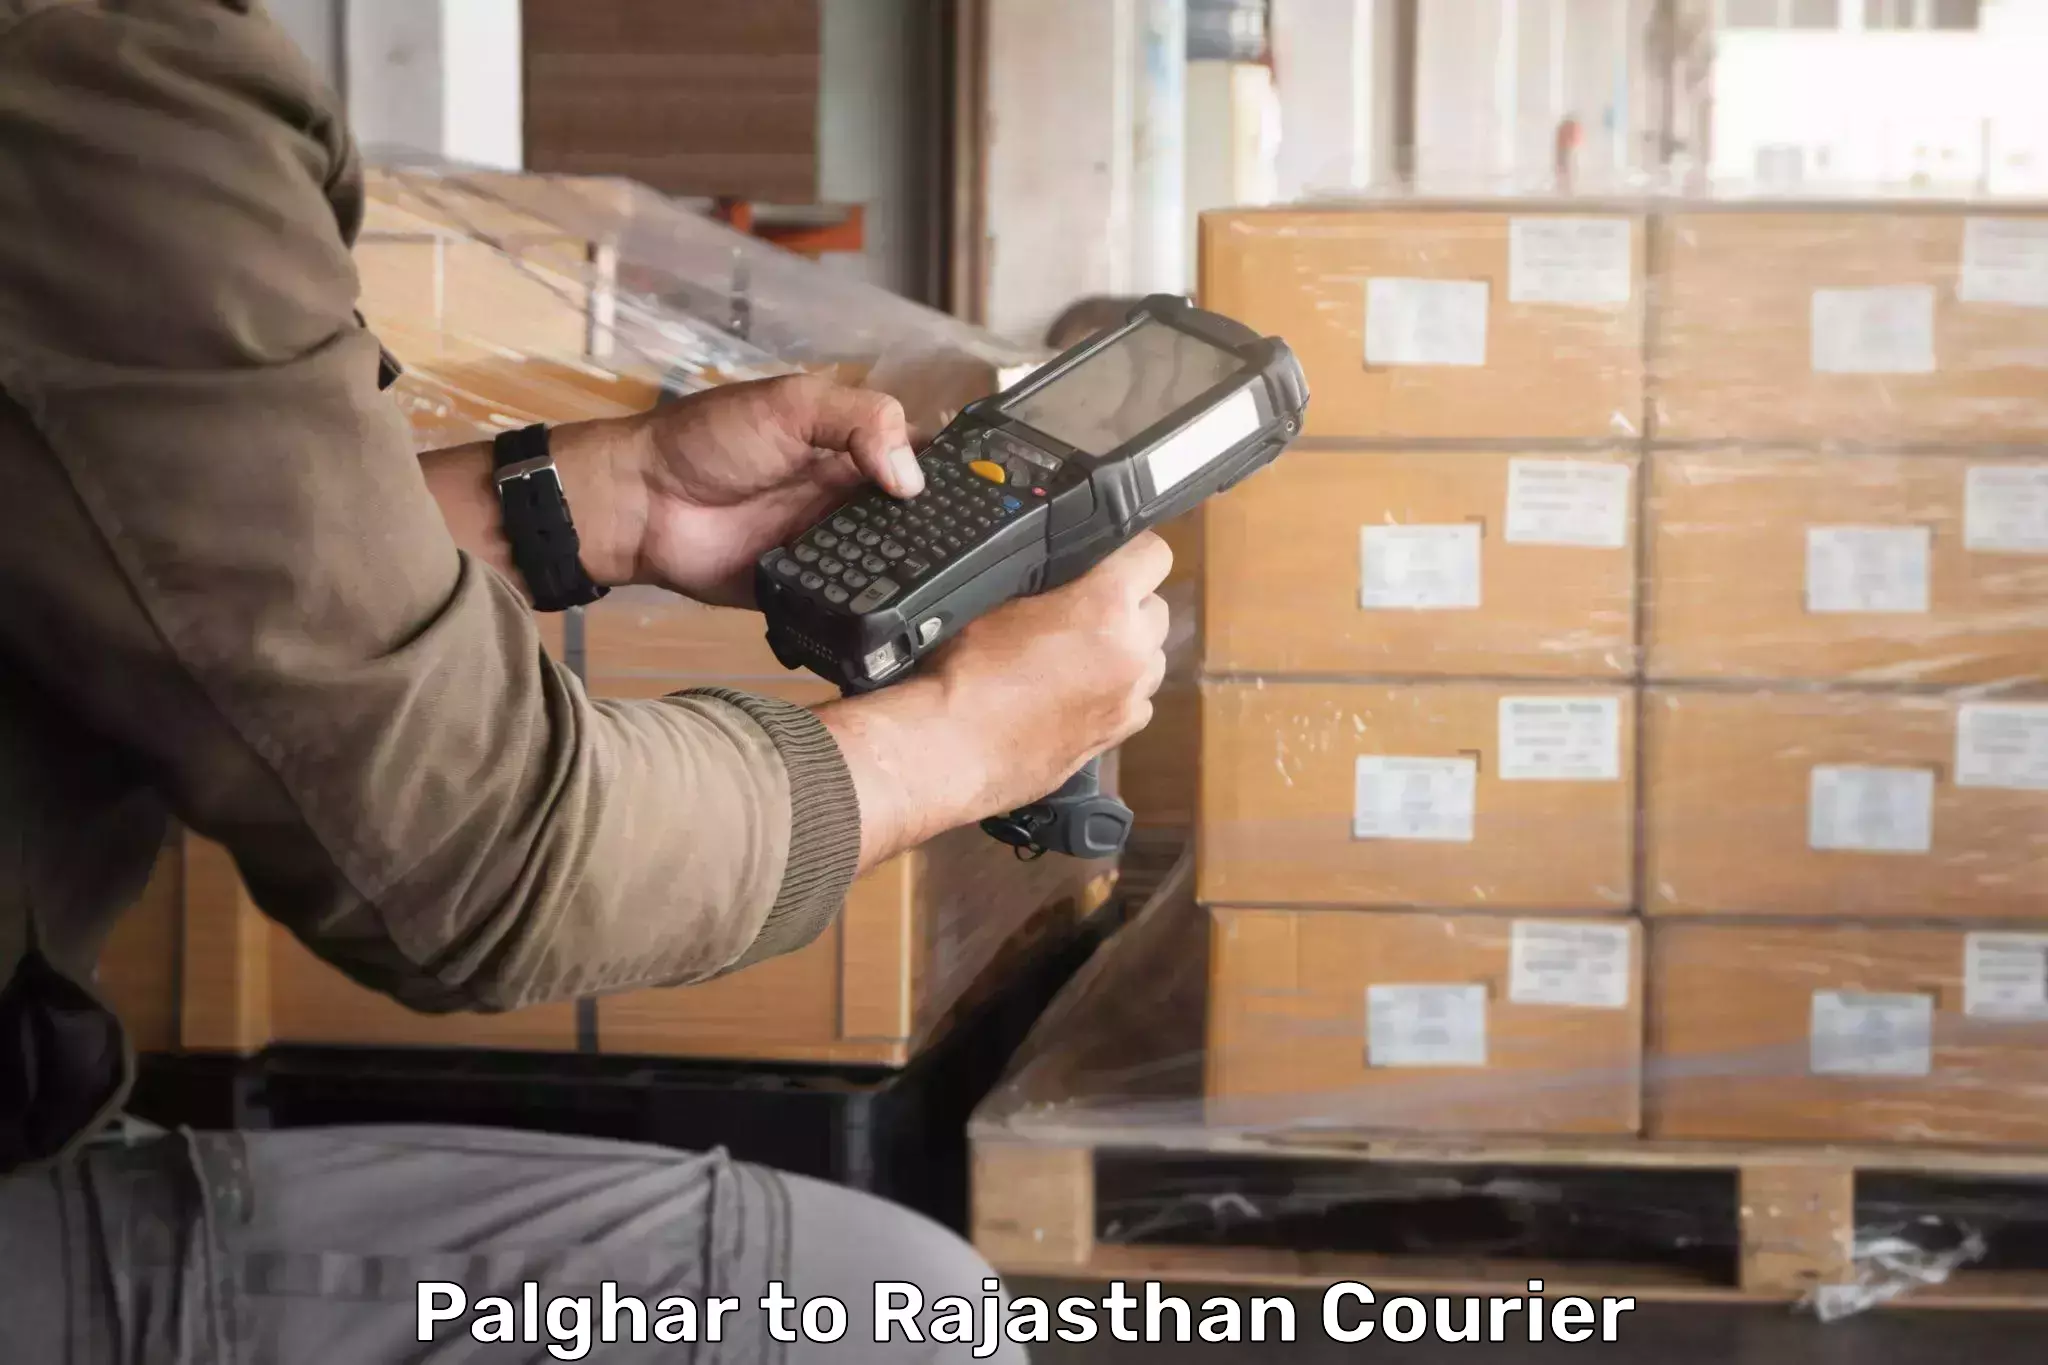 Speedy delivery service Palghar to Nasirabad